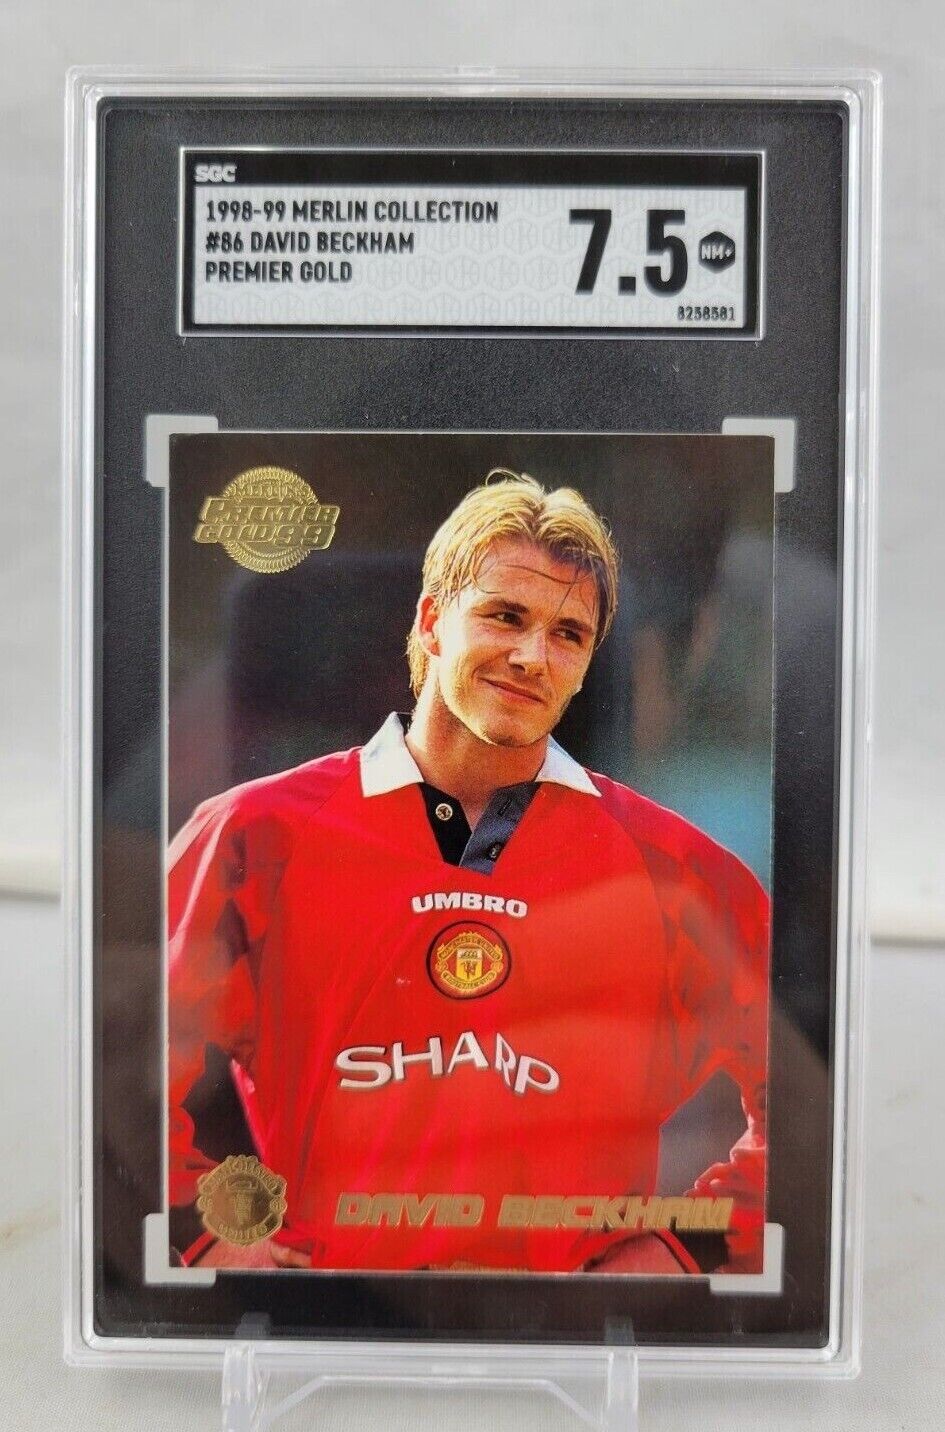 1998-99 Merlin Collection #86 David Beckham Premier Gold SGC 7.5 Manchester  U